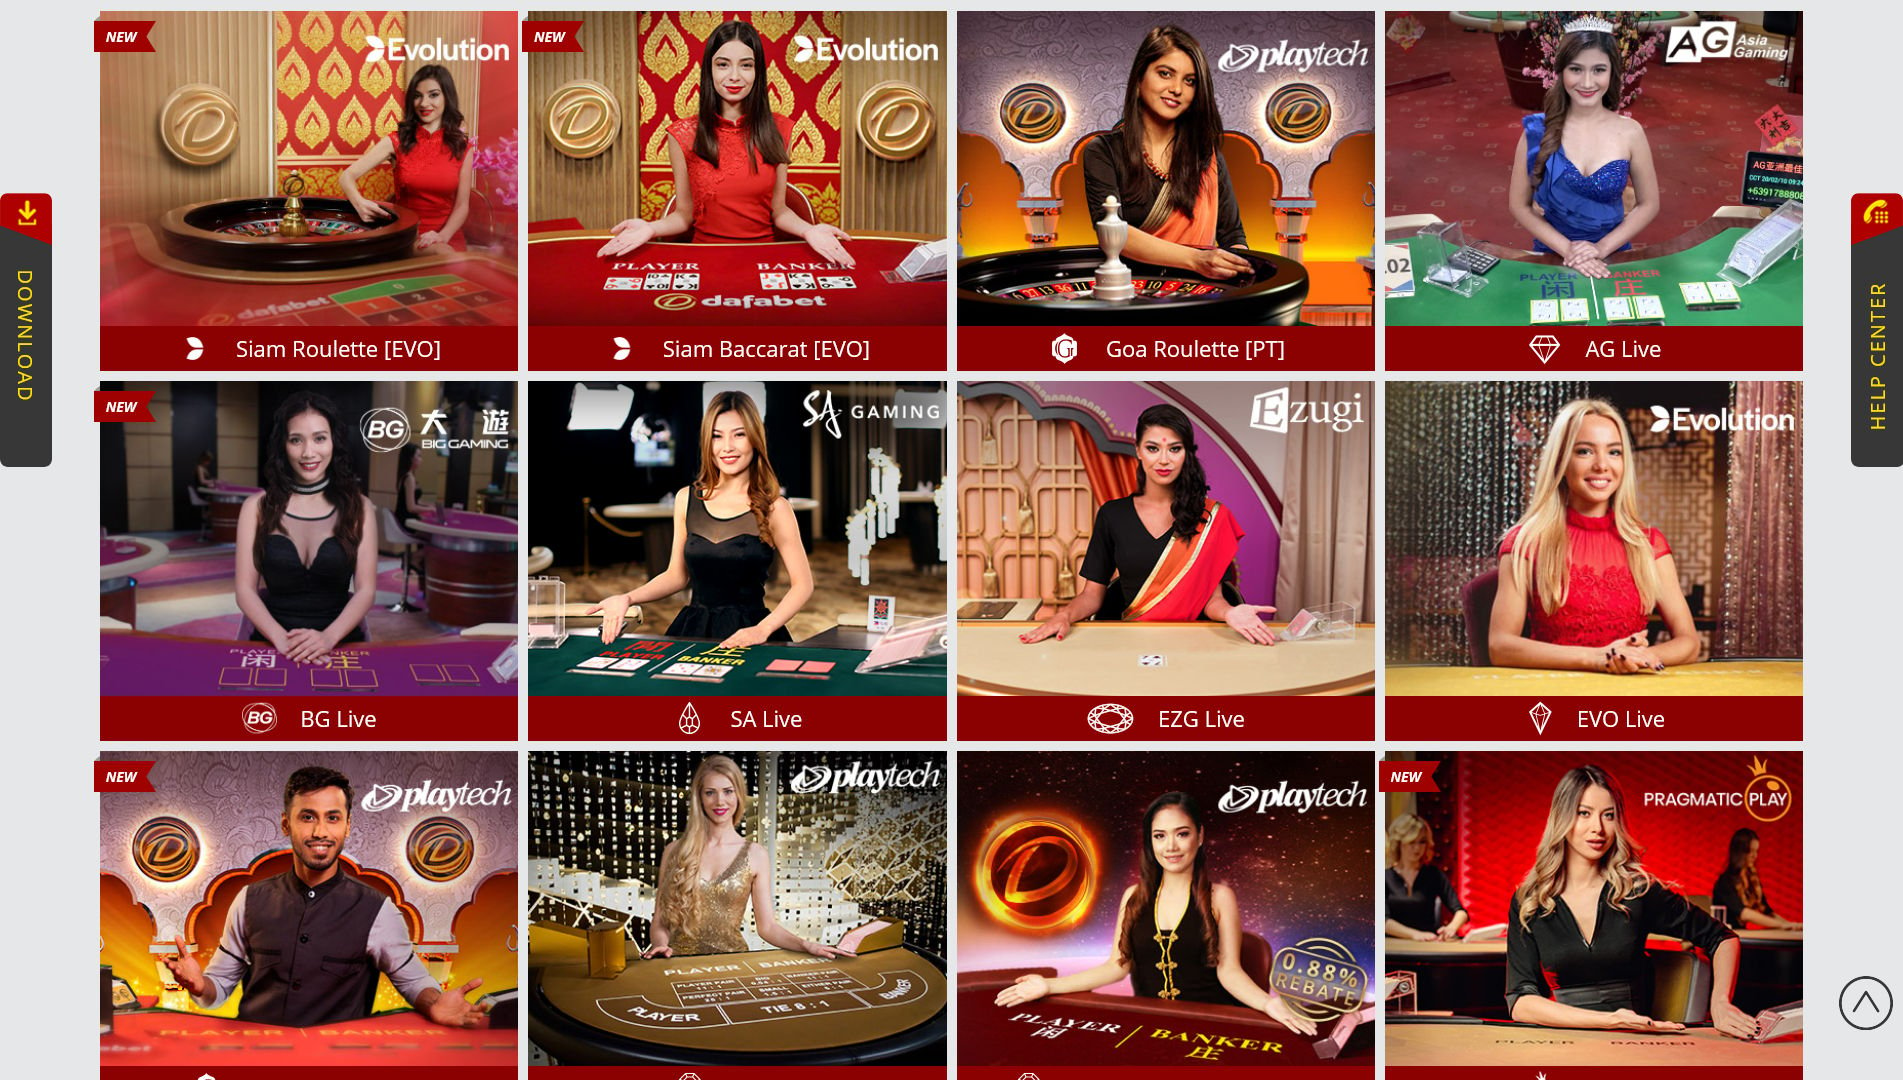 Dafabet 888 Casino Live Dealer Games